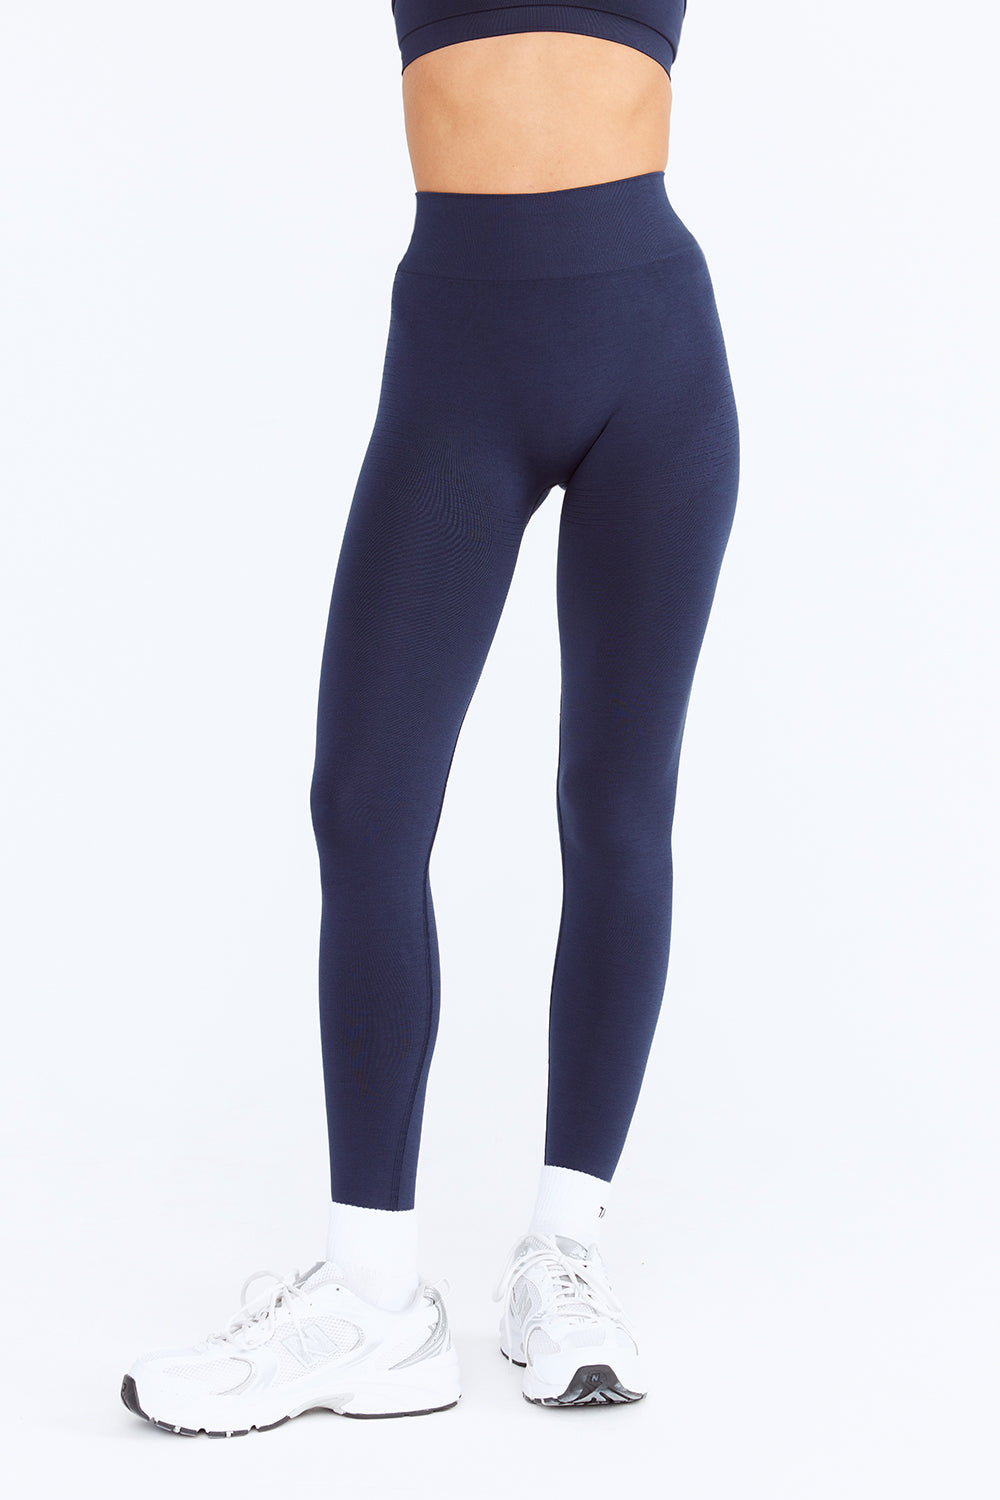 KIWI RATA Women Scrunch Butt Yoga Pants High Waist Sport Workout Leggings  Trousers Tummy Control Tights at  Women's Clothing store